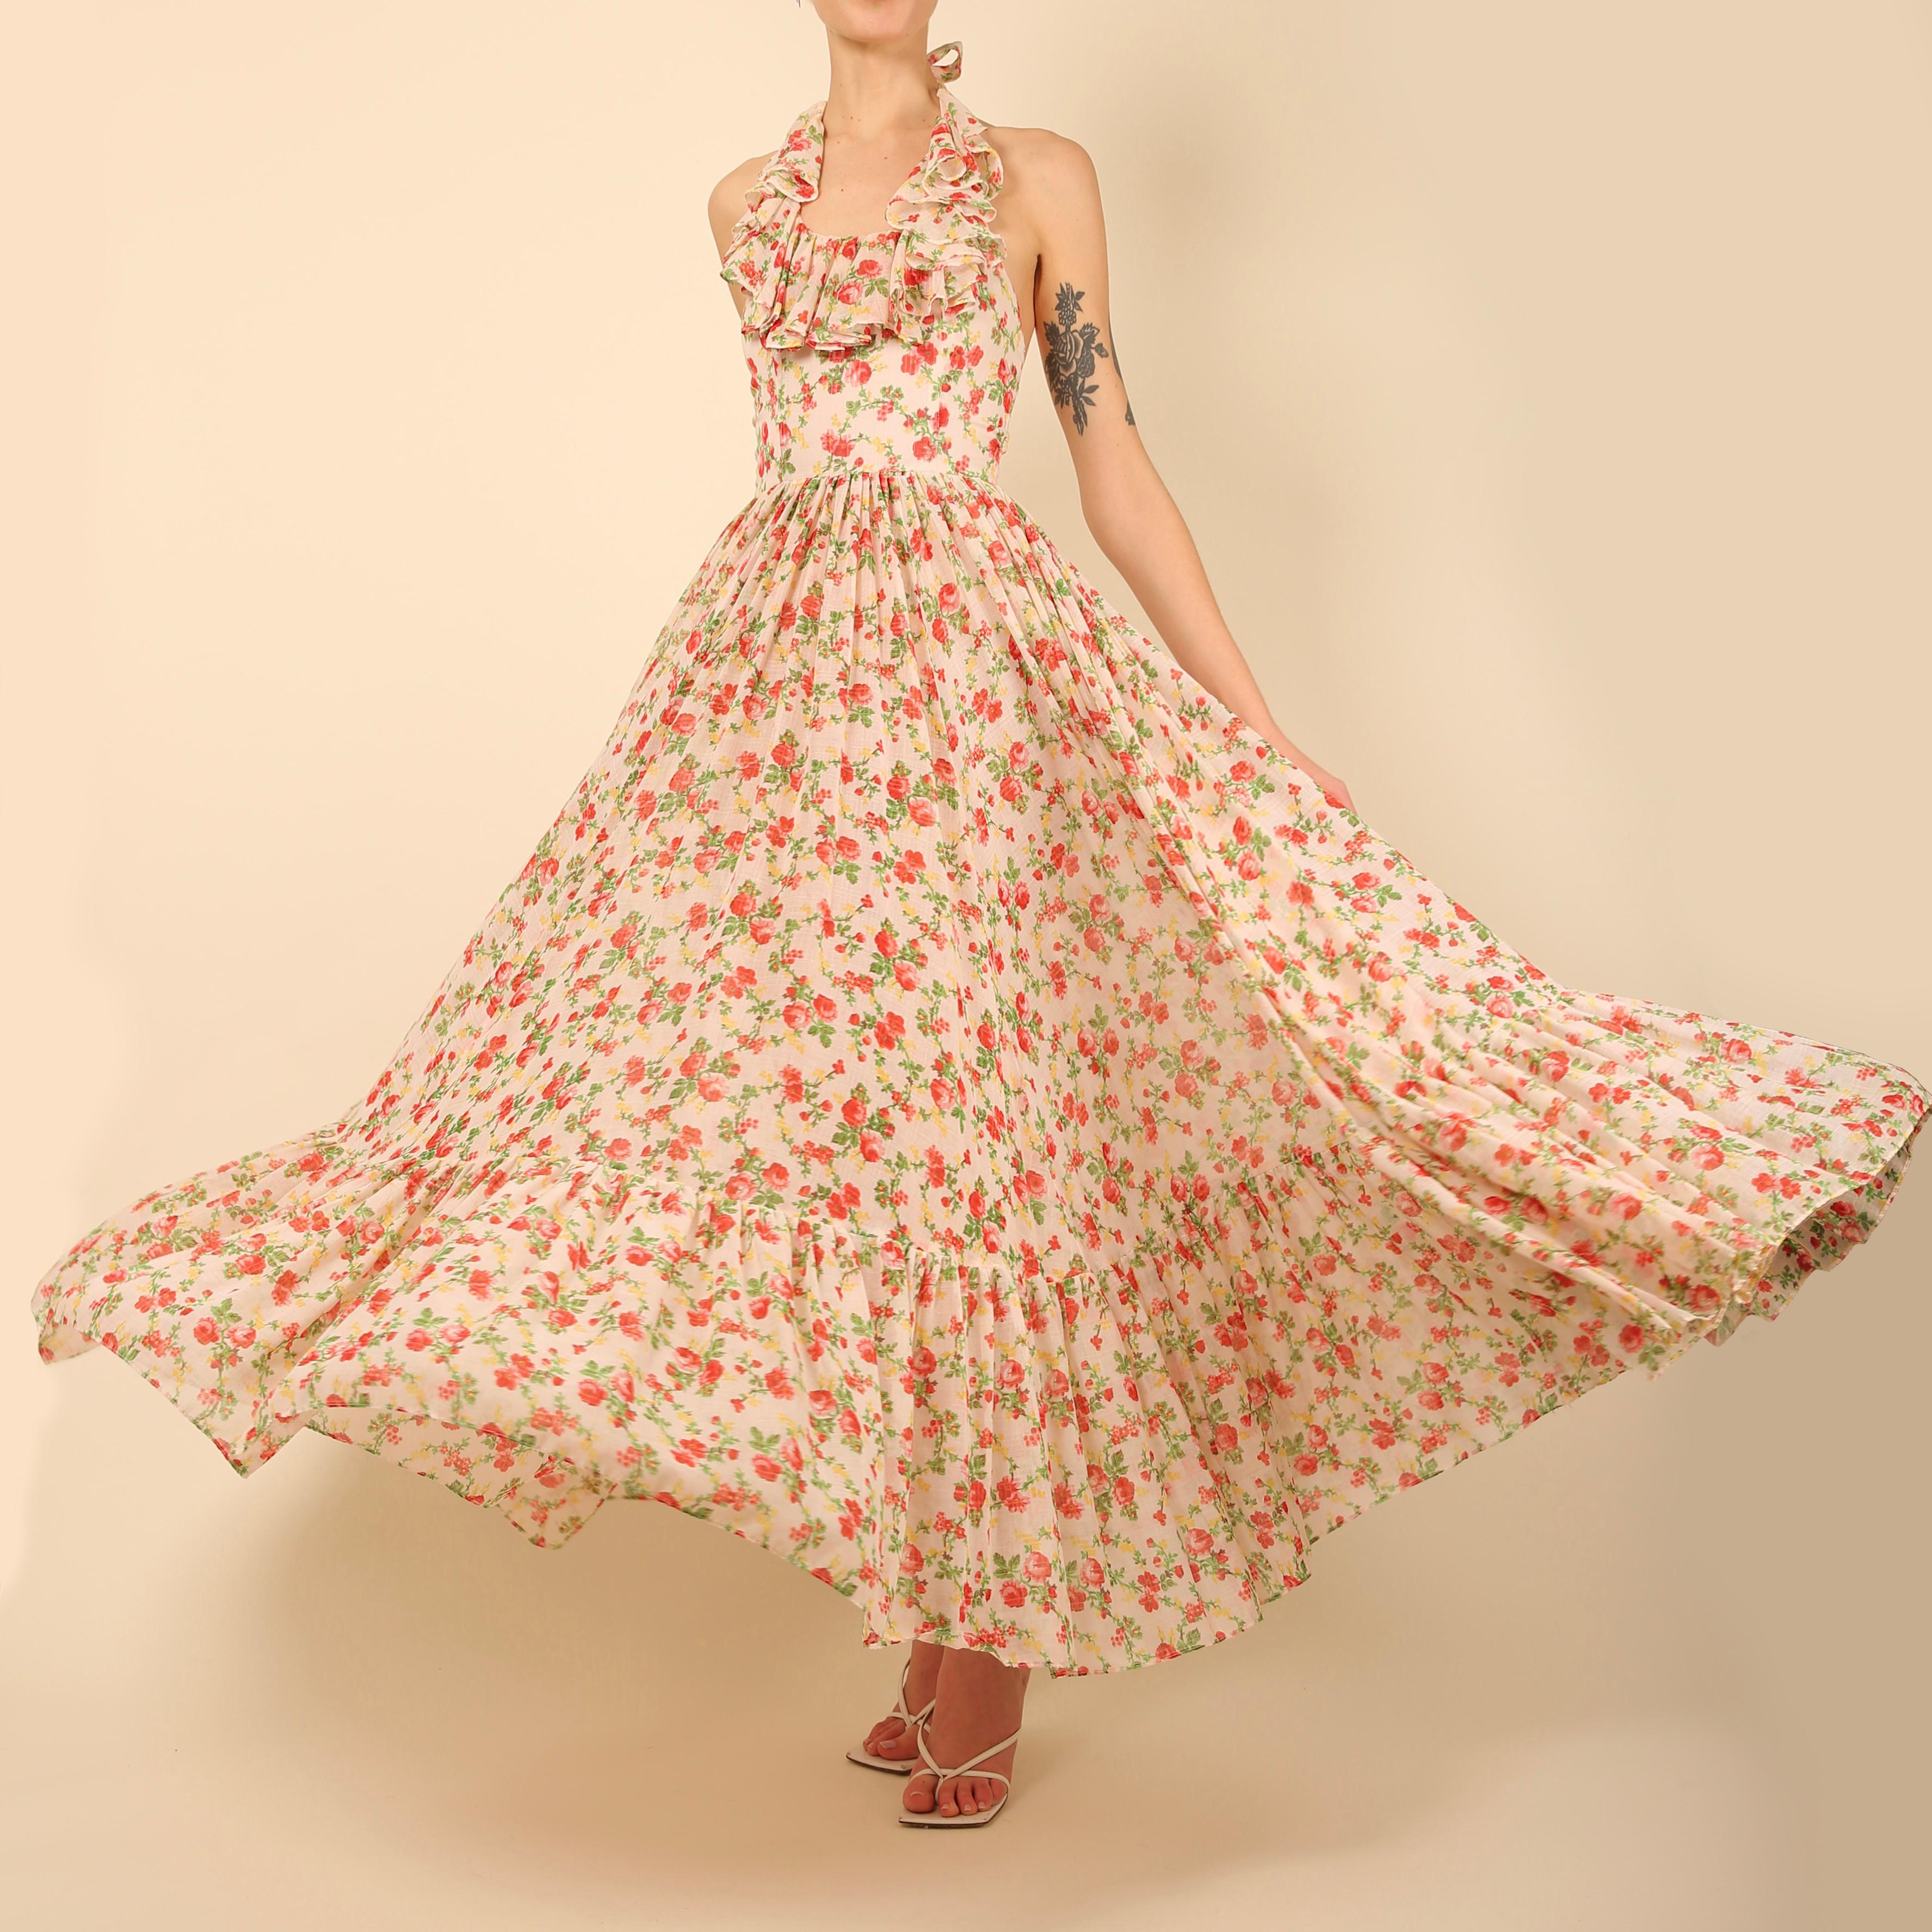 Vintage cottagecore prairie cotton white red floral print halter backless dress For Sale 1